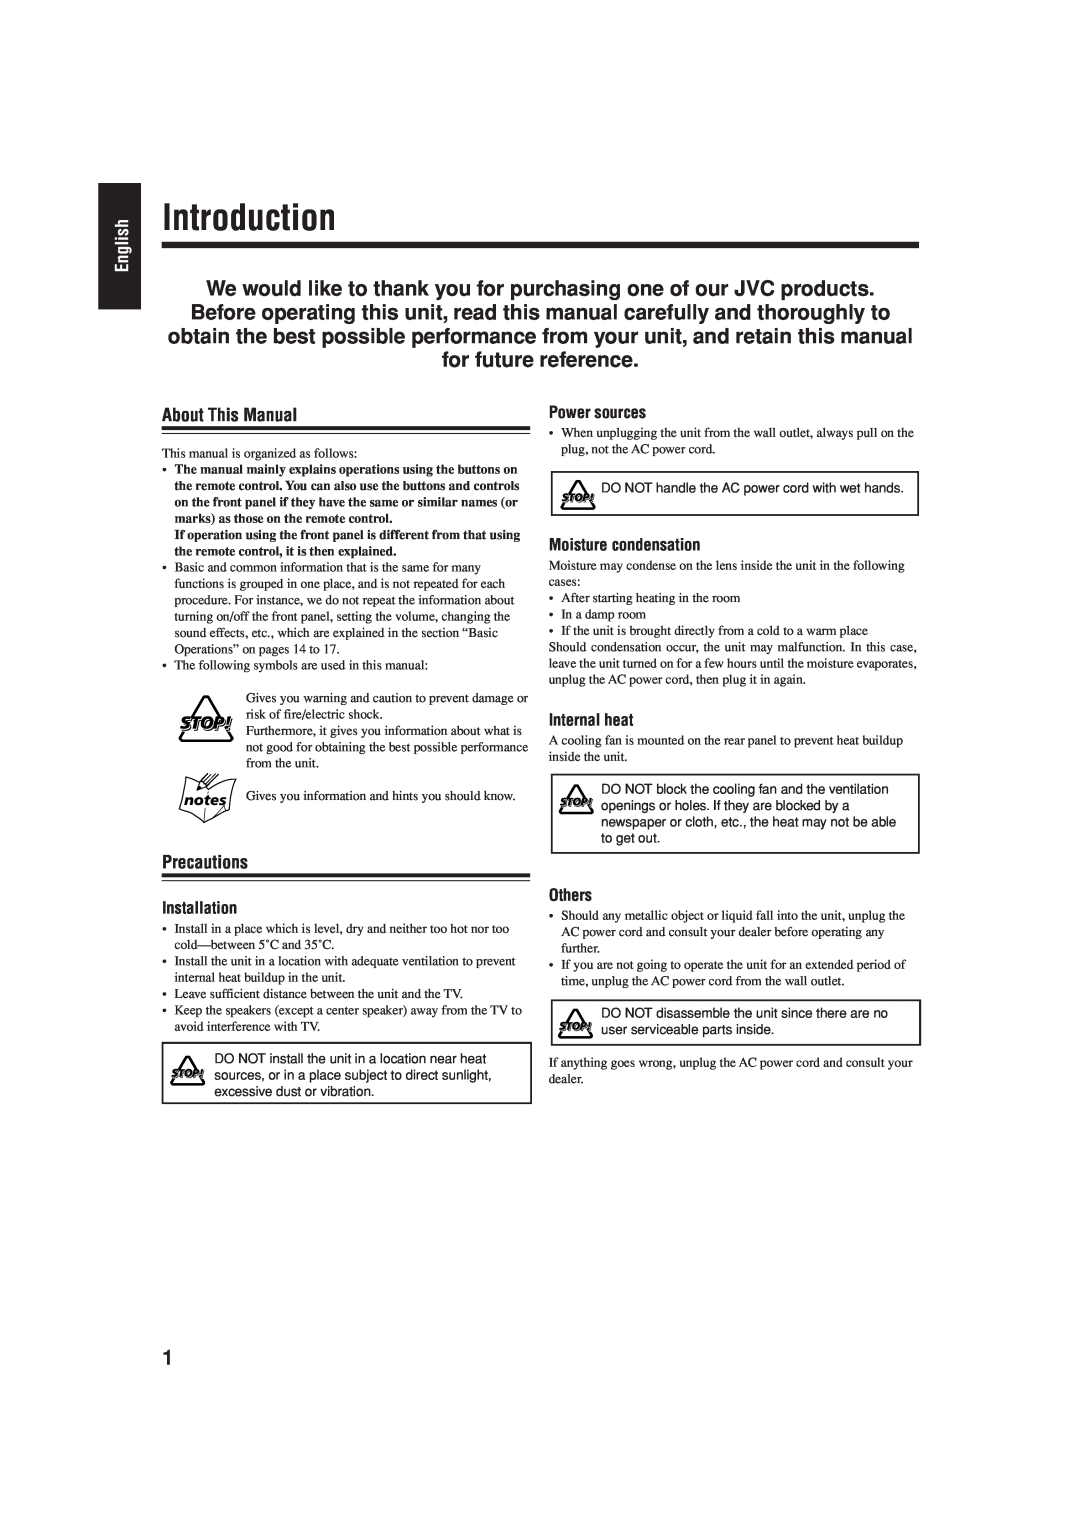 JVC GVT0119-001C Introduction, About This Manual, Precautions, Power sources, Moisture condensation, Internal heat, Others 